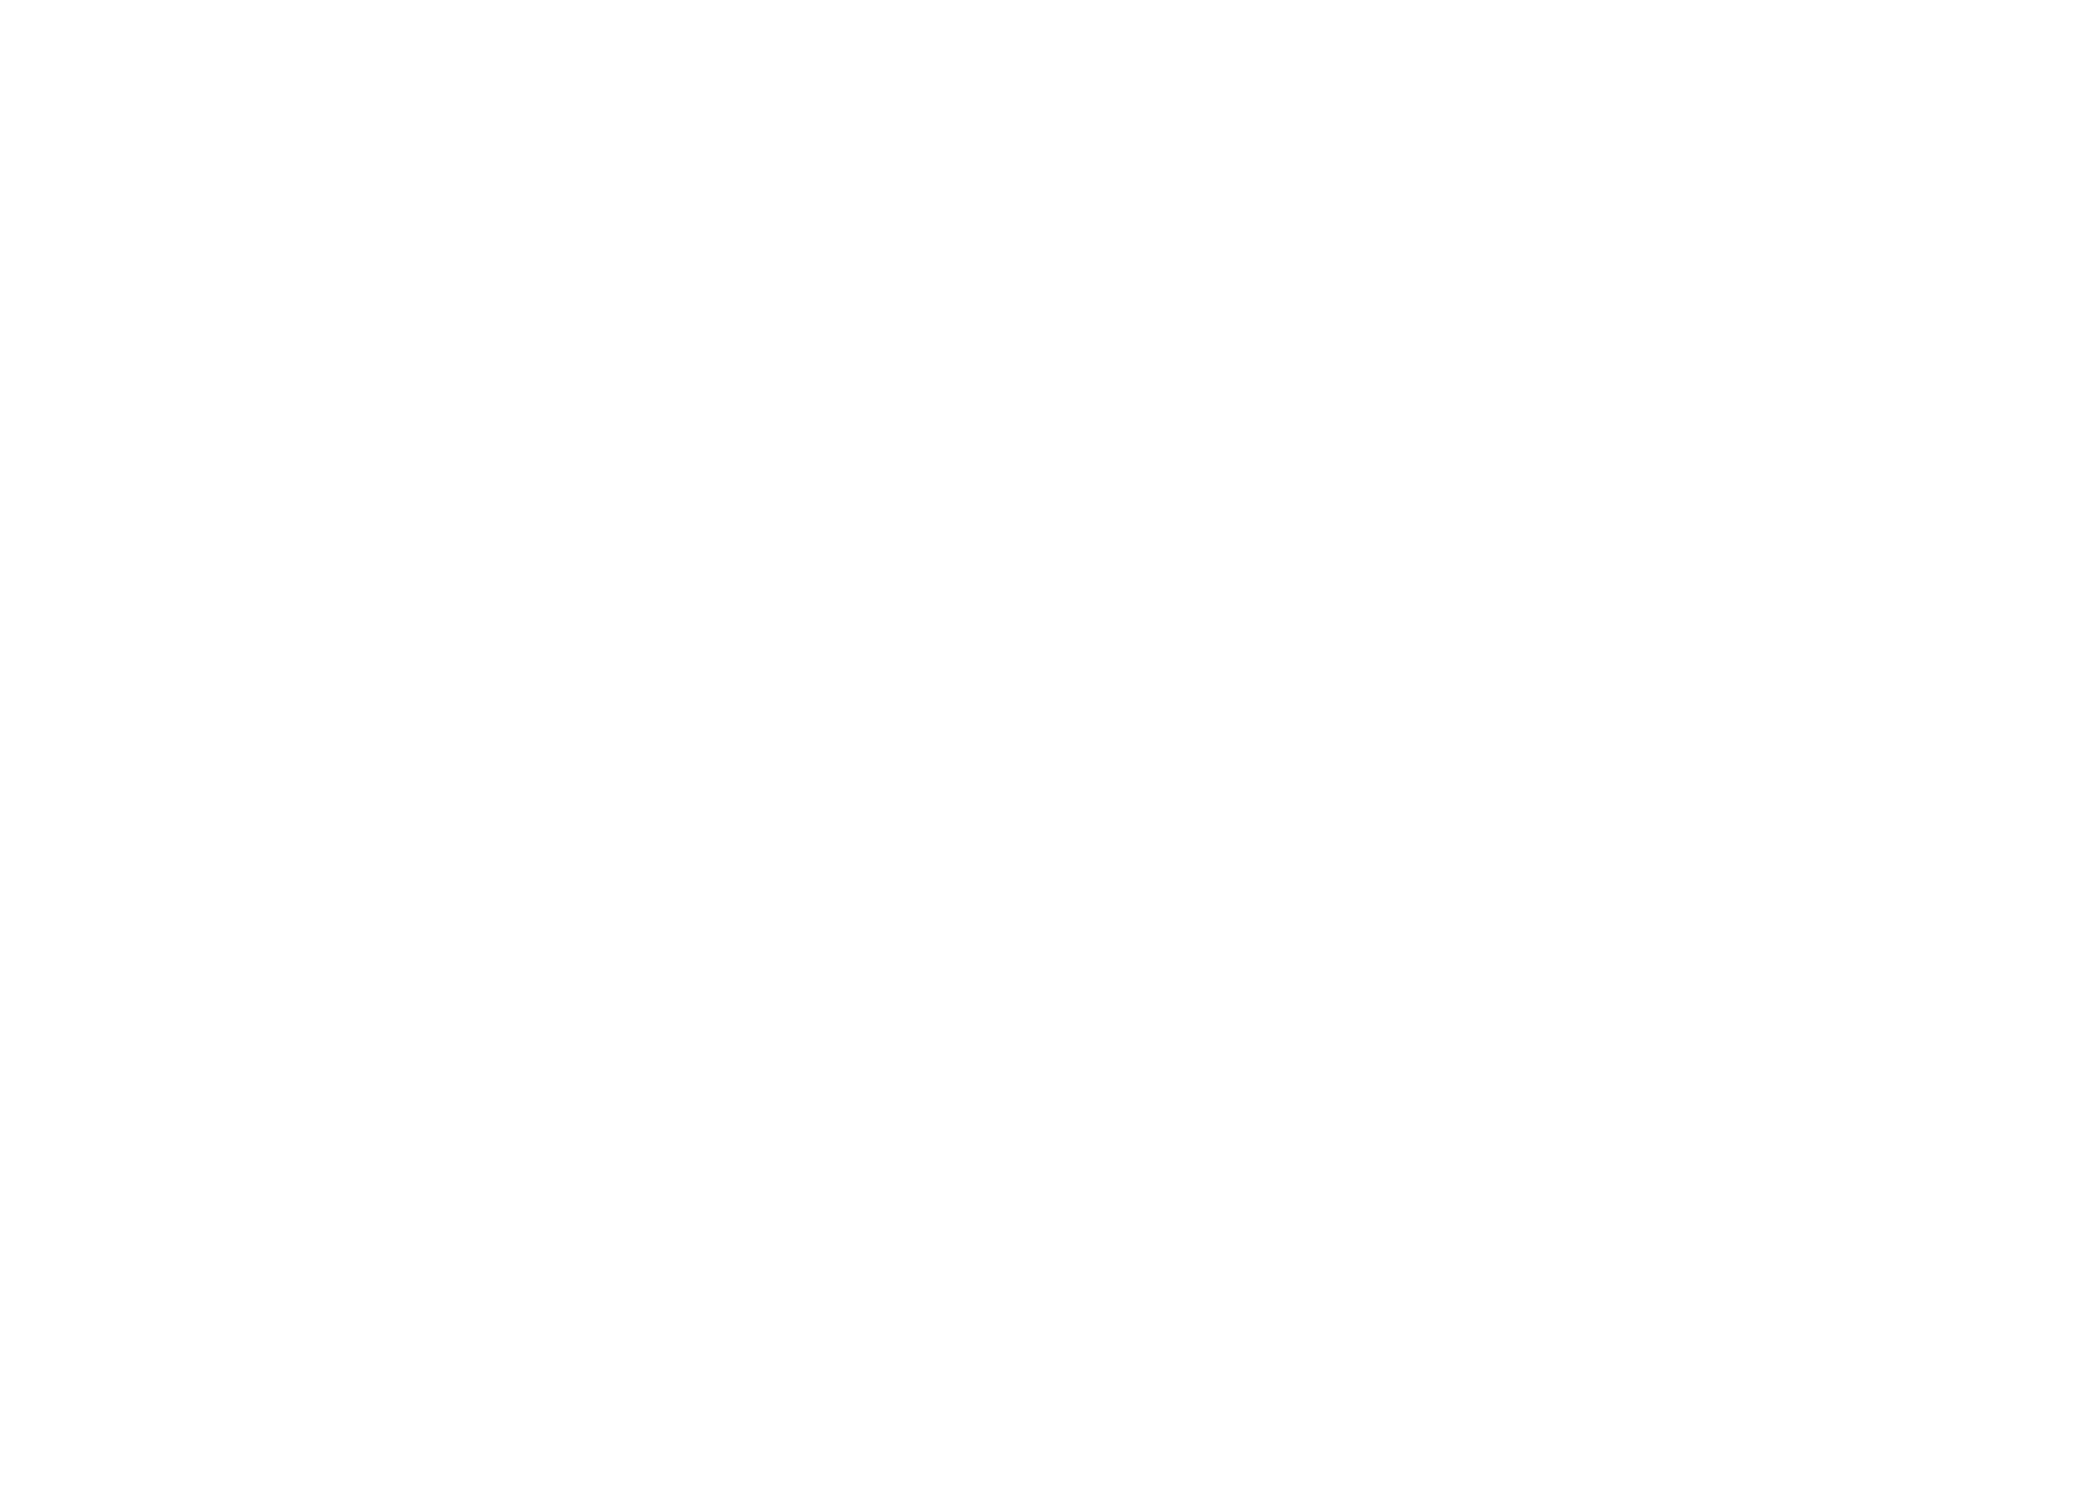 ECKA Granules company logo